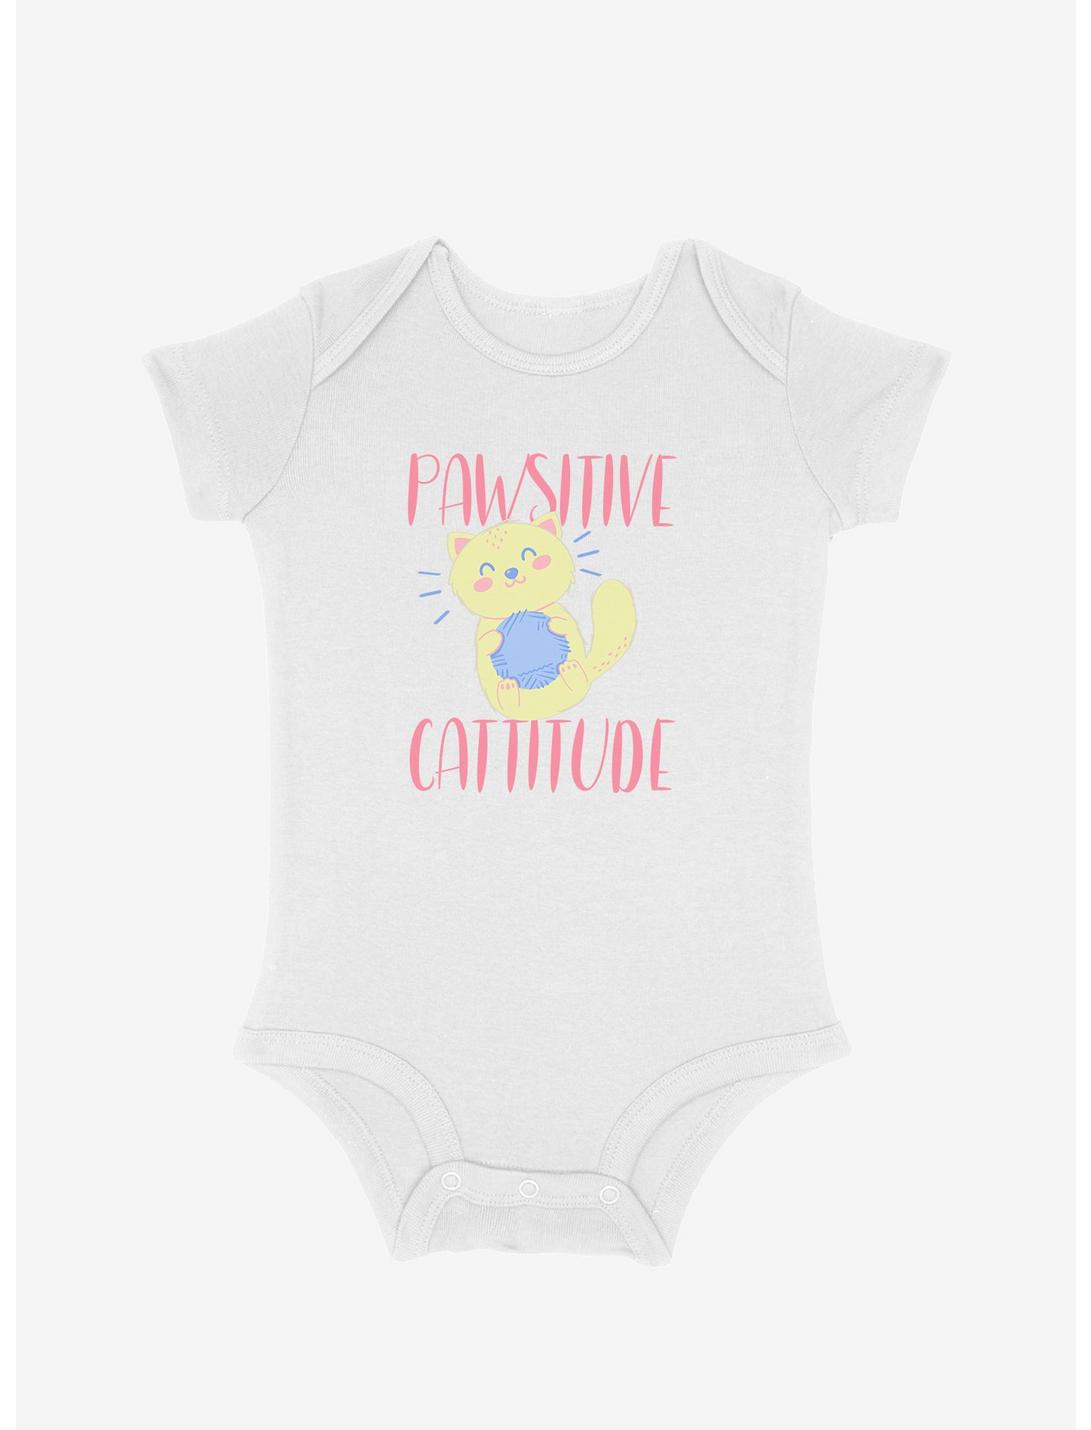 Pawsitive Catitude Infant Bodysuit, WHITE, hi-res